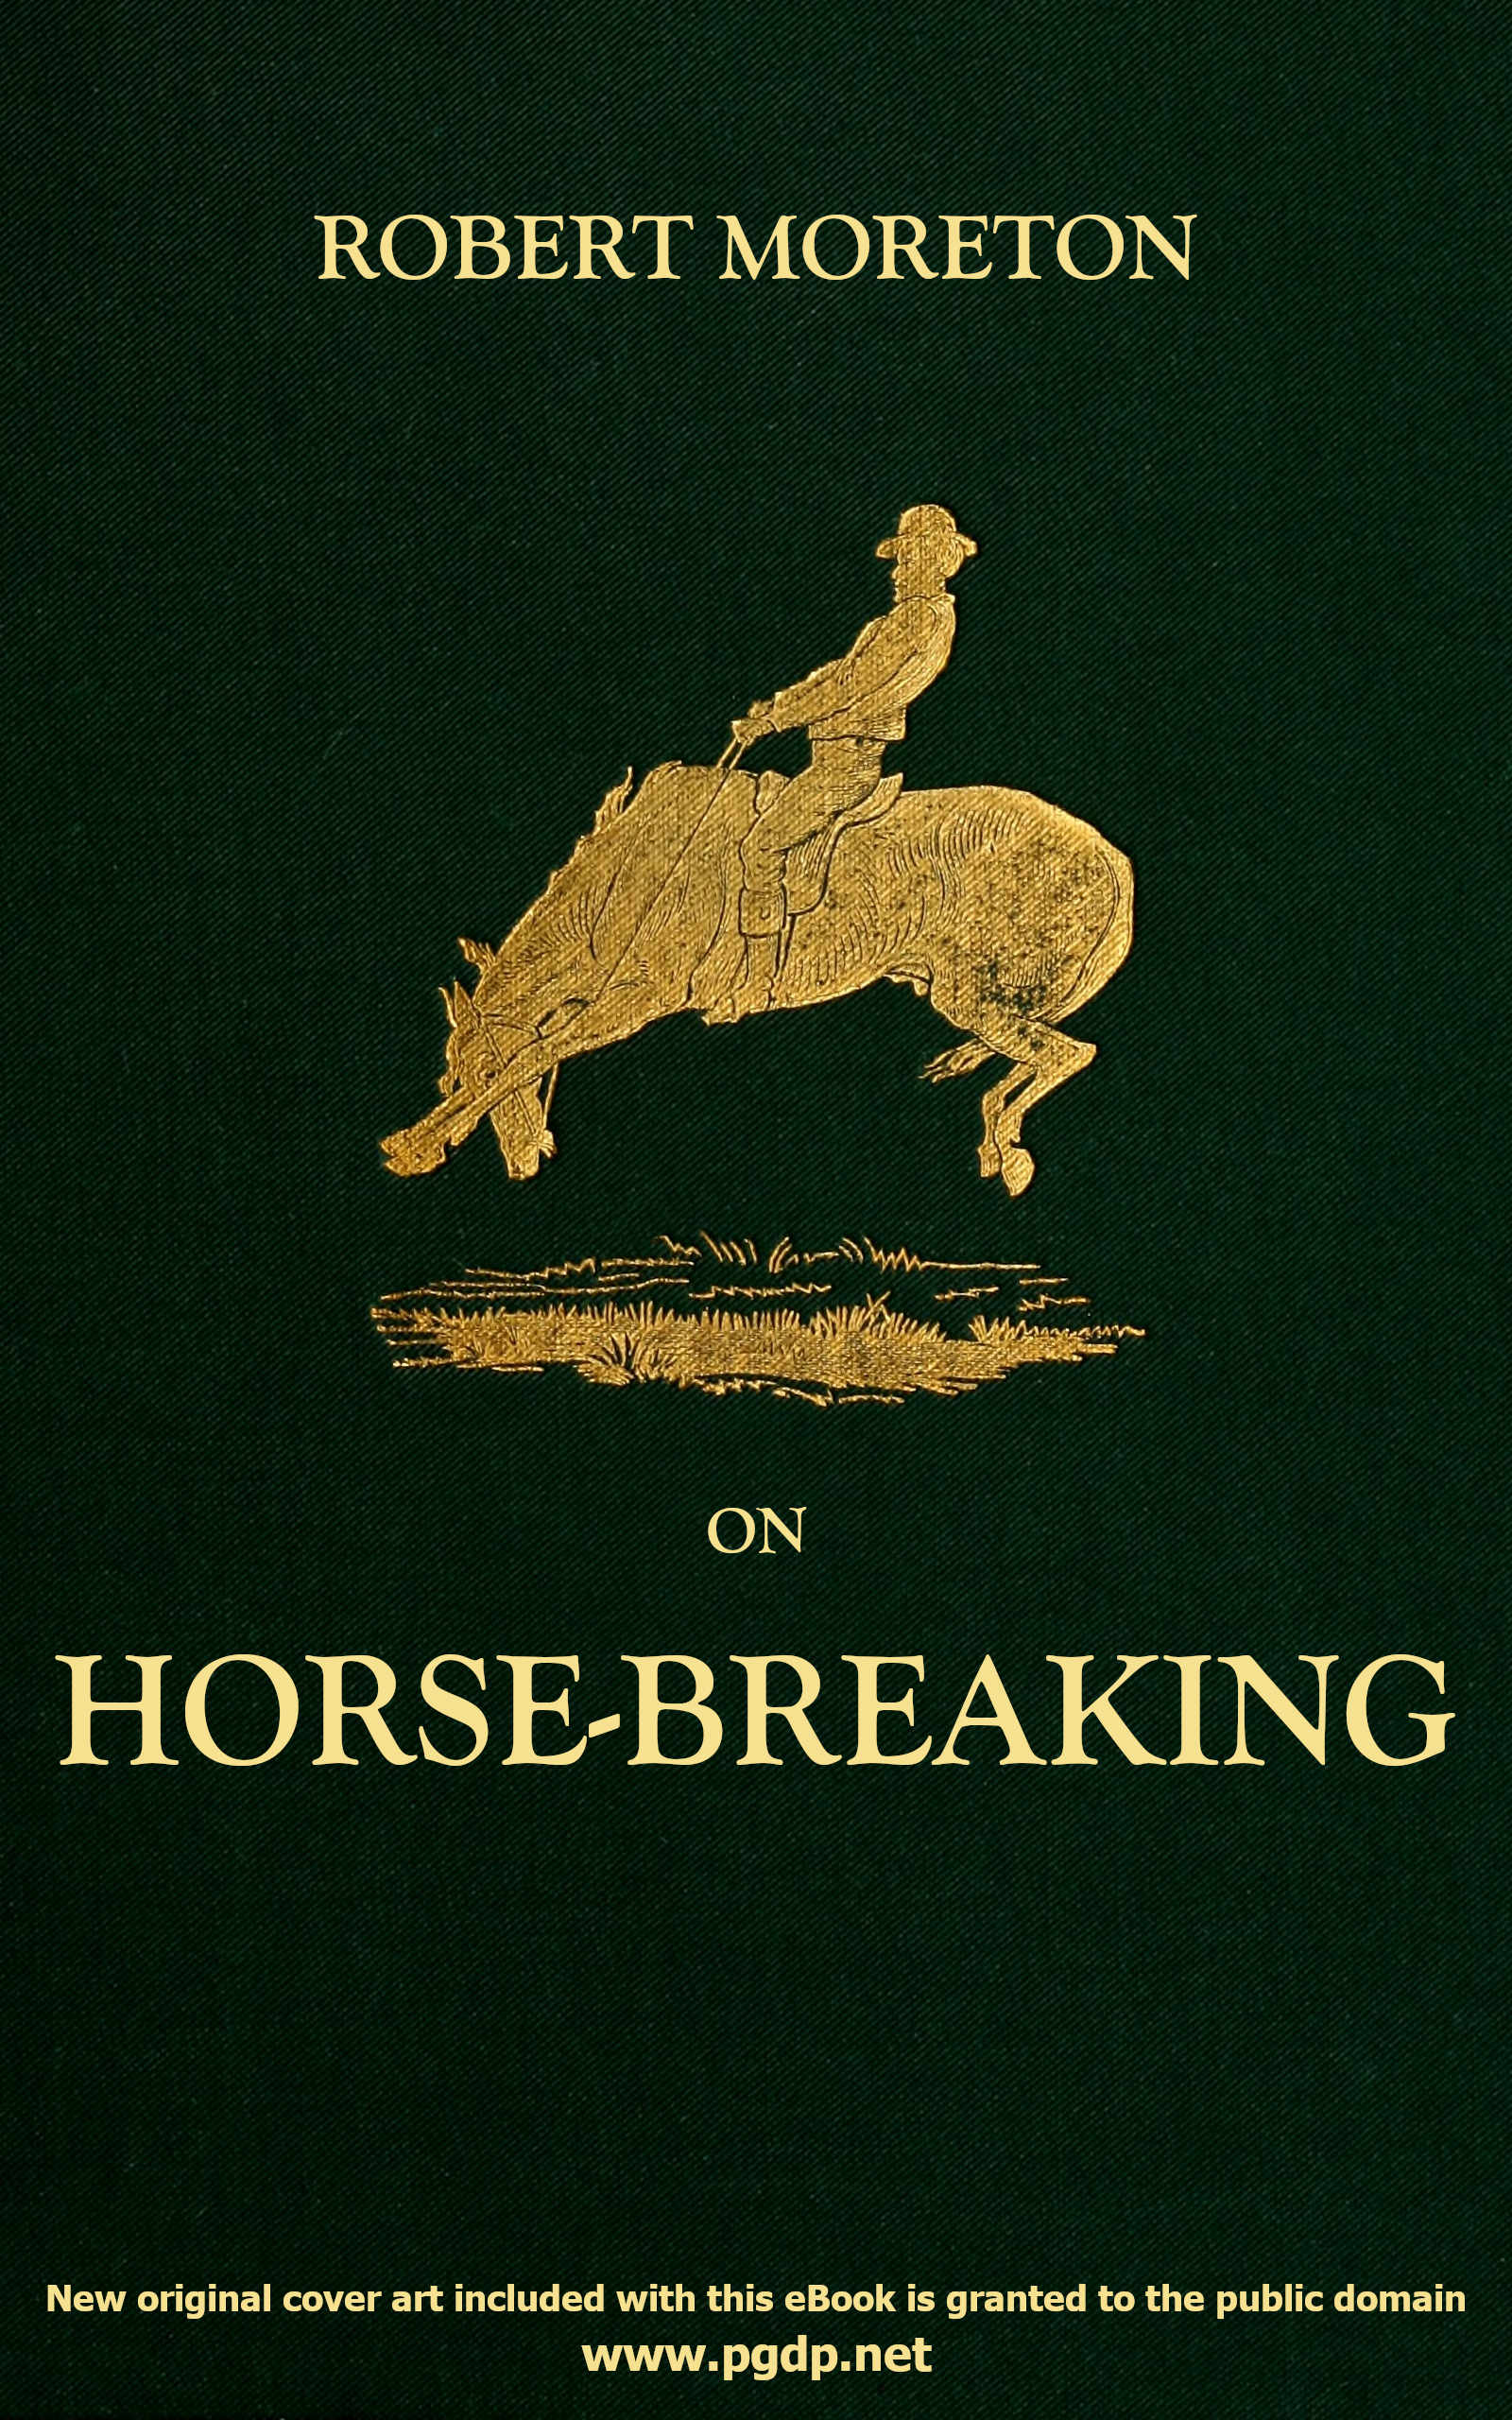 On horse-breaking